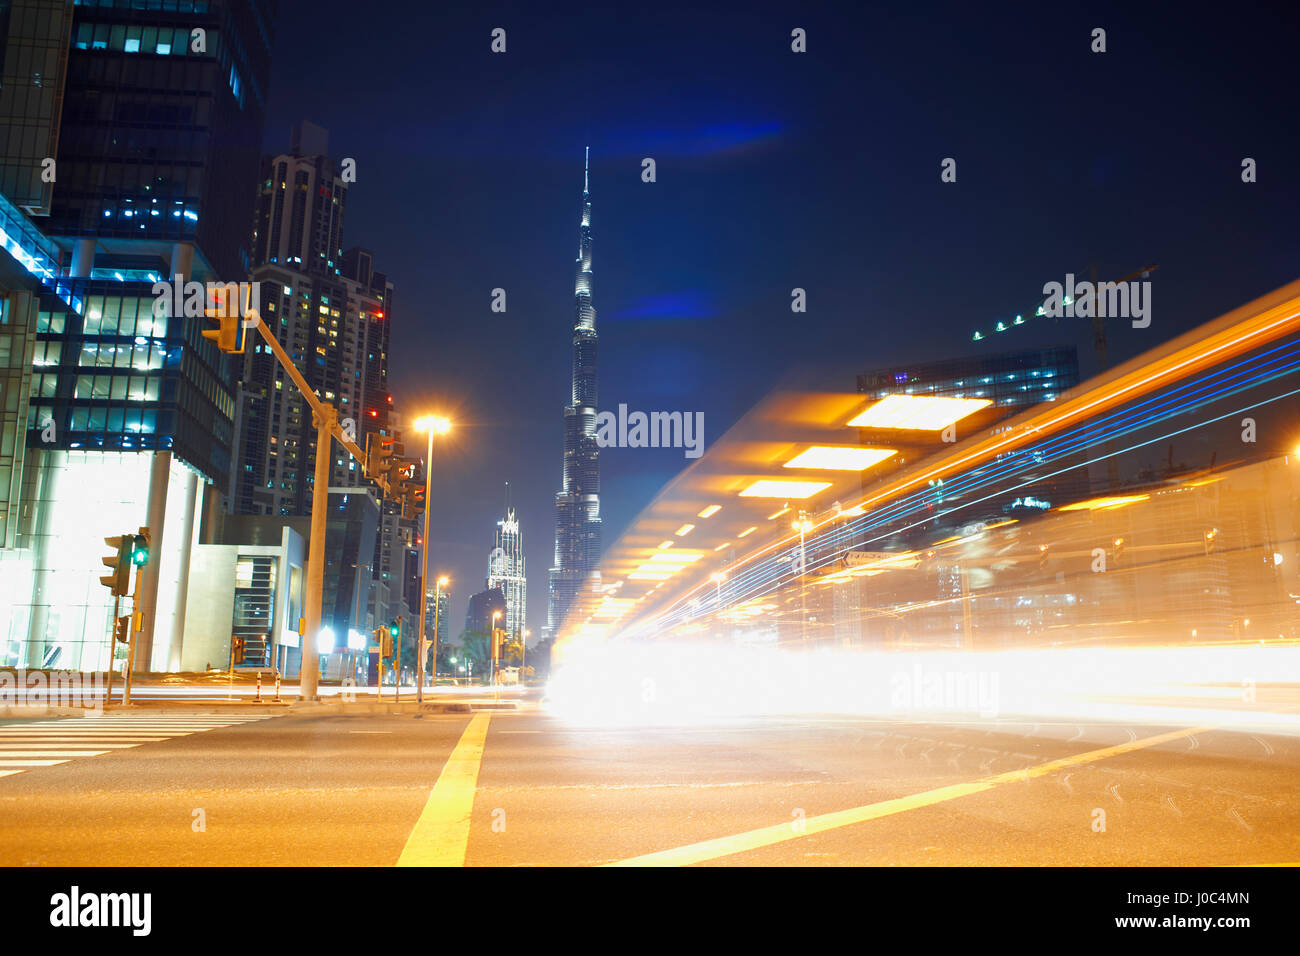 Cityscape at night showing Burj Khalifa in background and light trails, Dubai, UAE Stock Photo